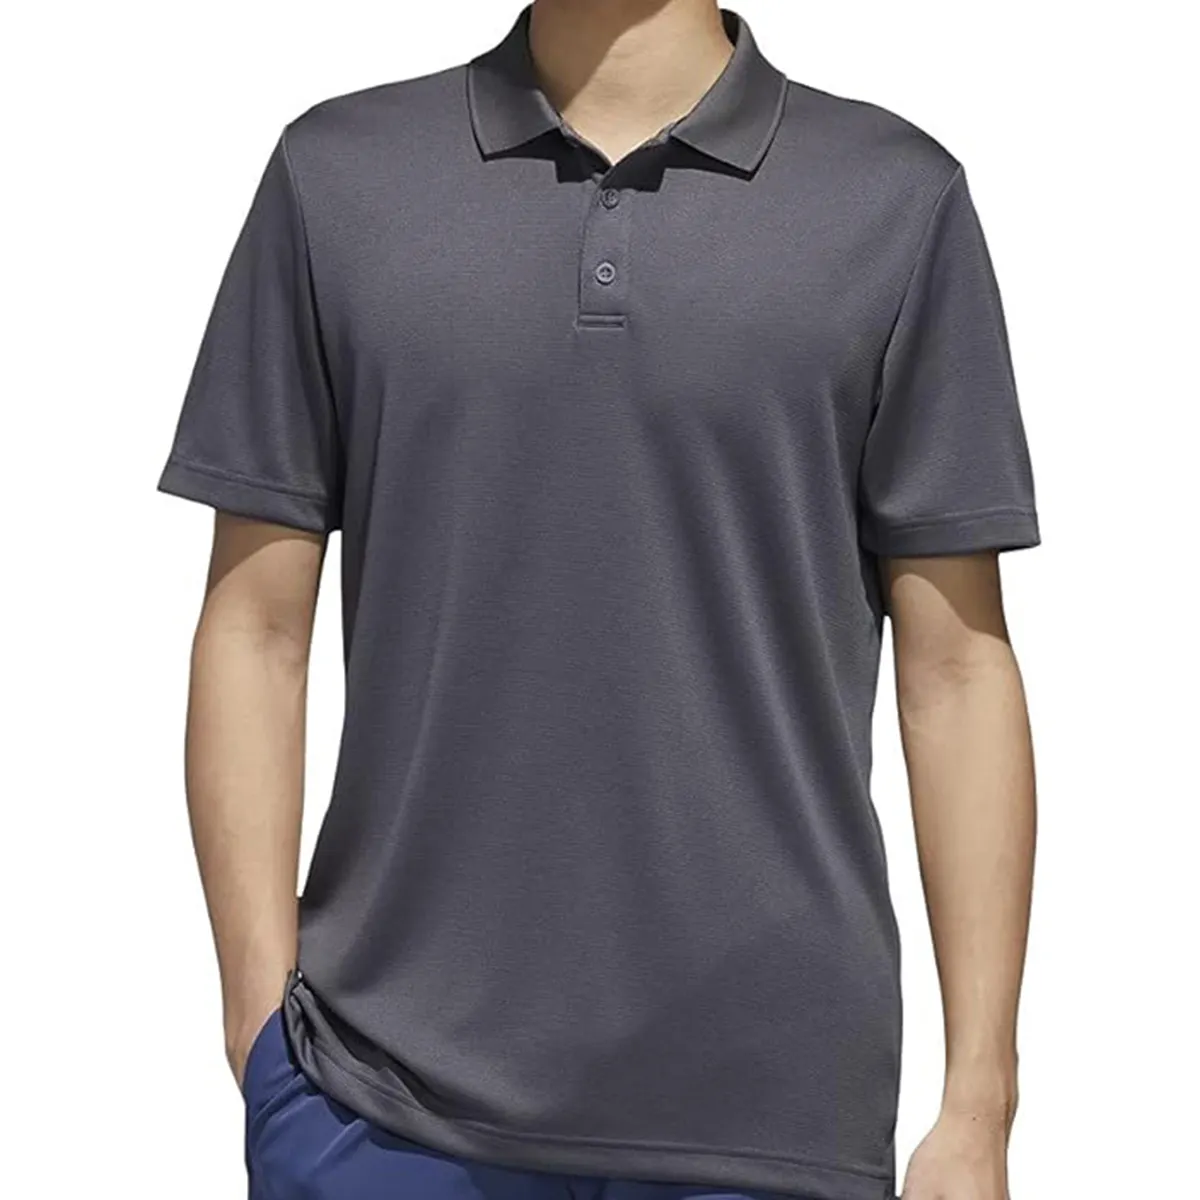 Bespoke kaus Polo Golf, poliester spandeks atau katun terasa lengan pendek leher V atau kerah tetap